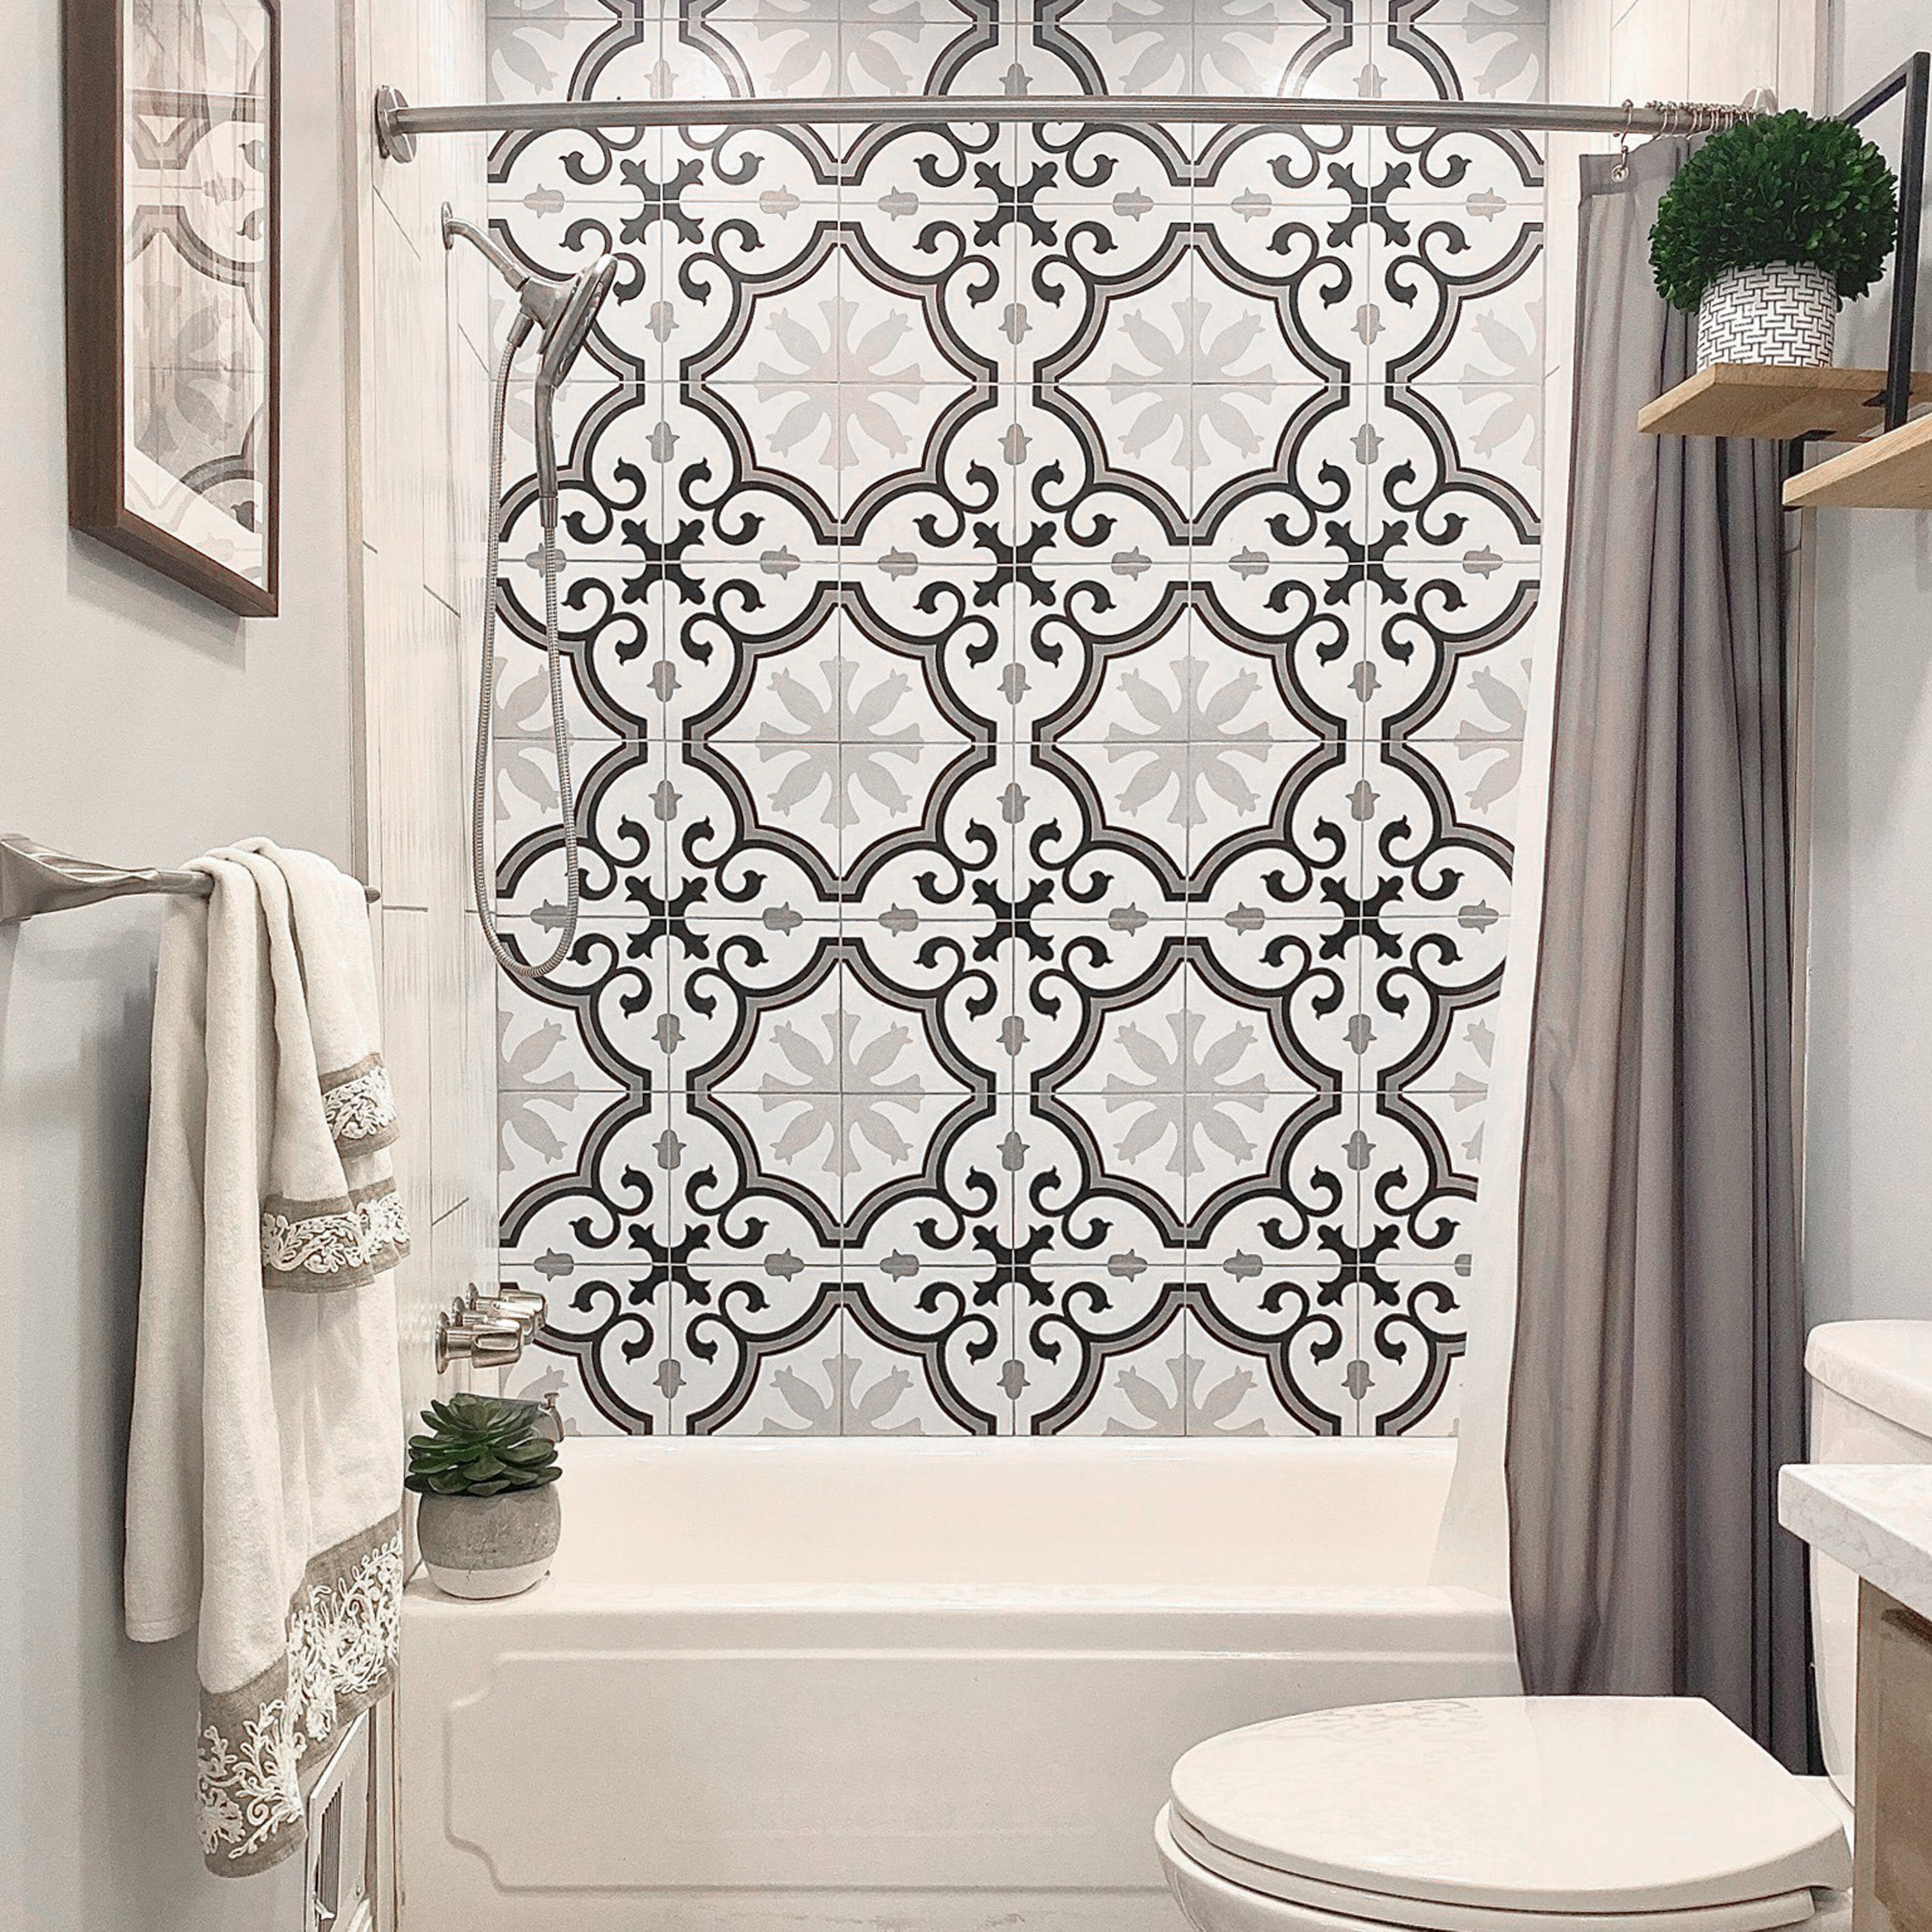 12 X White Diamond/Grey Sparkle/White Gloss/Tile Effect Bathroom Wall Panels 